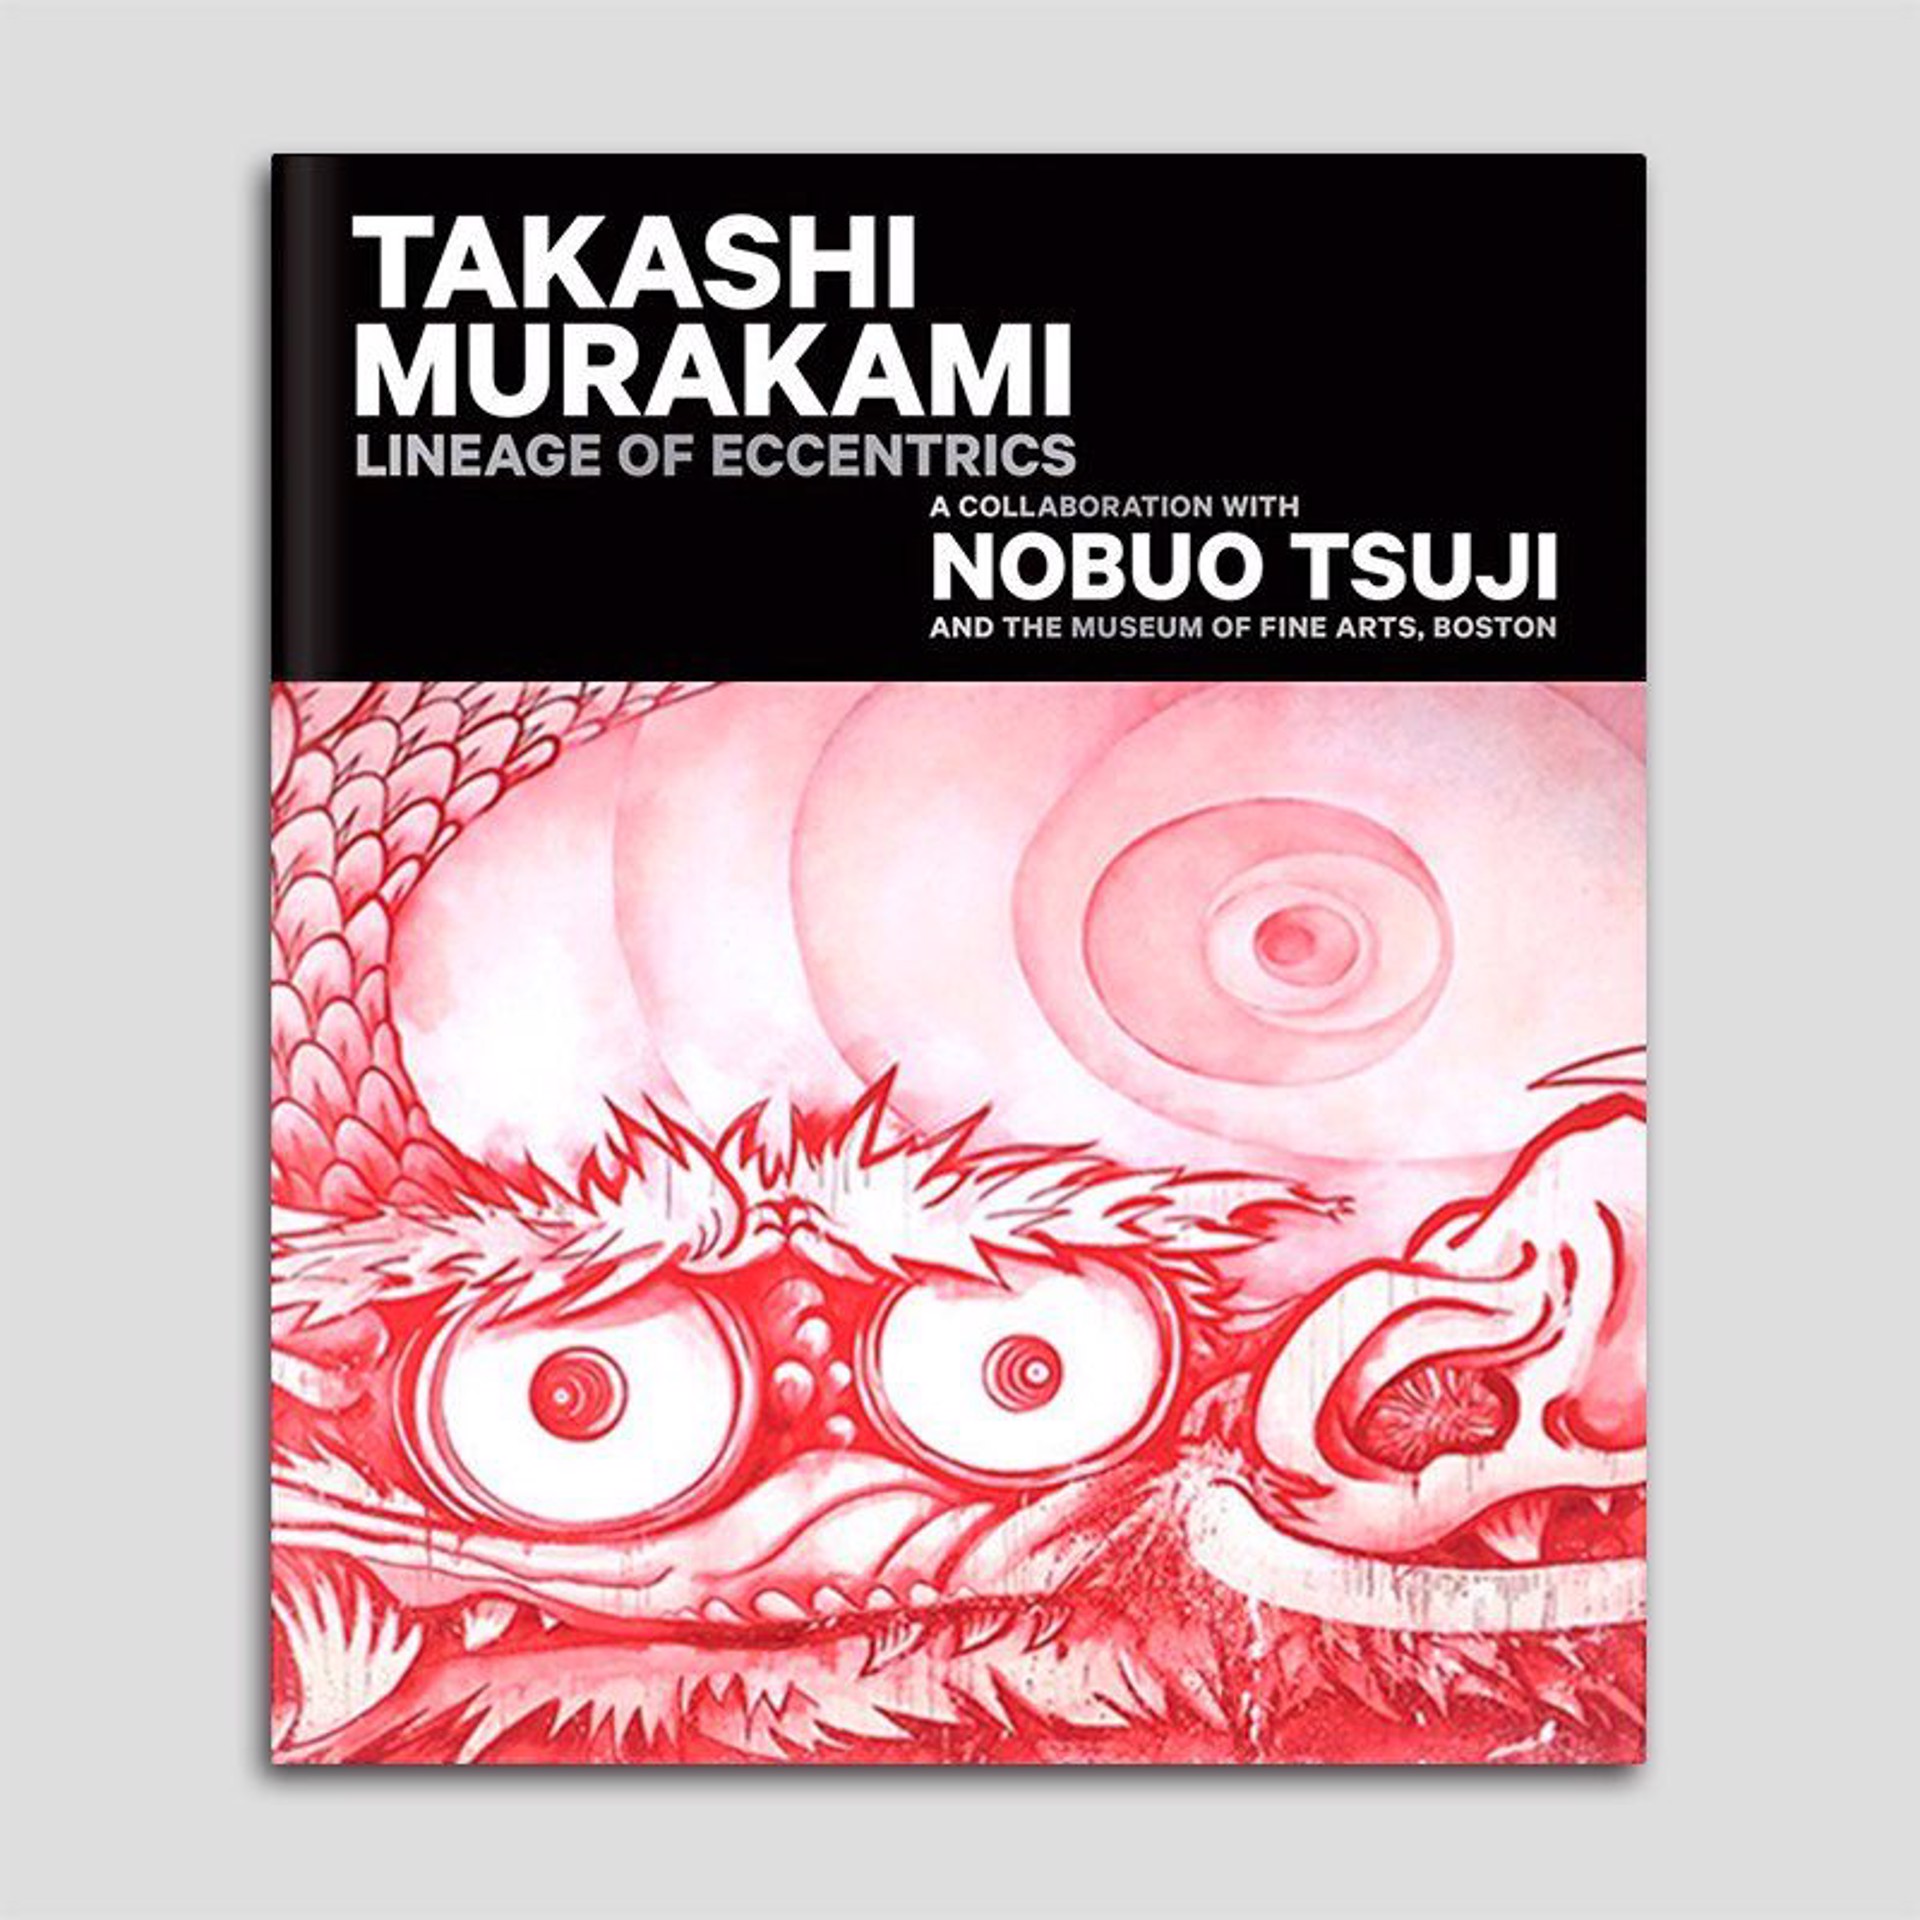 Takashi Murakami: Lineage of Eccentrics by Takashi Murakami